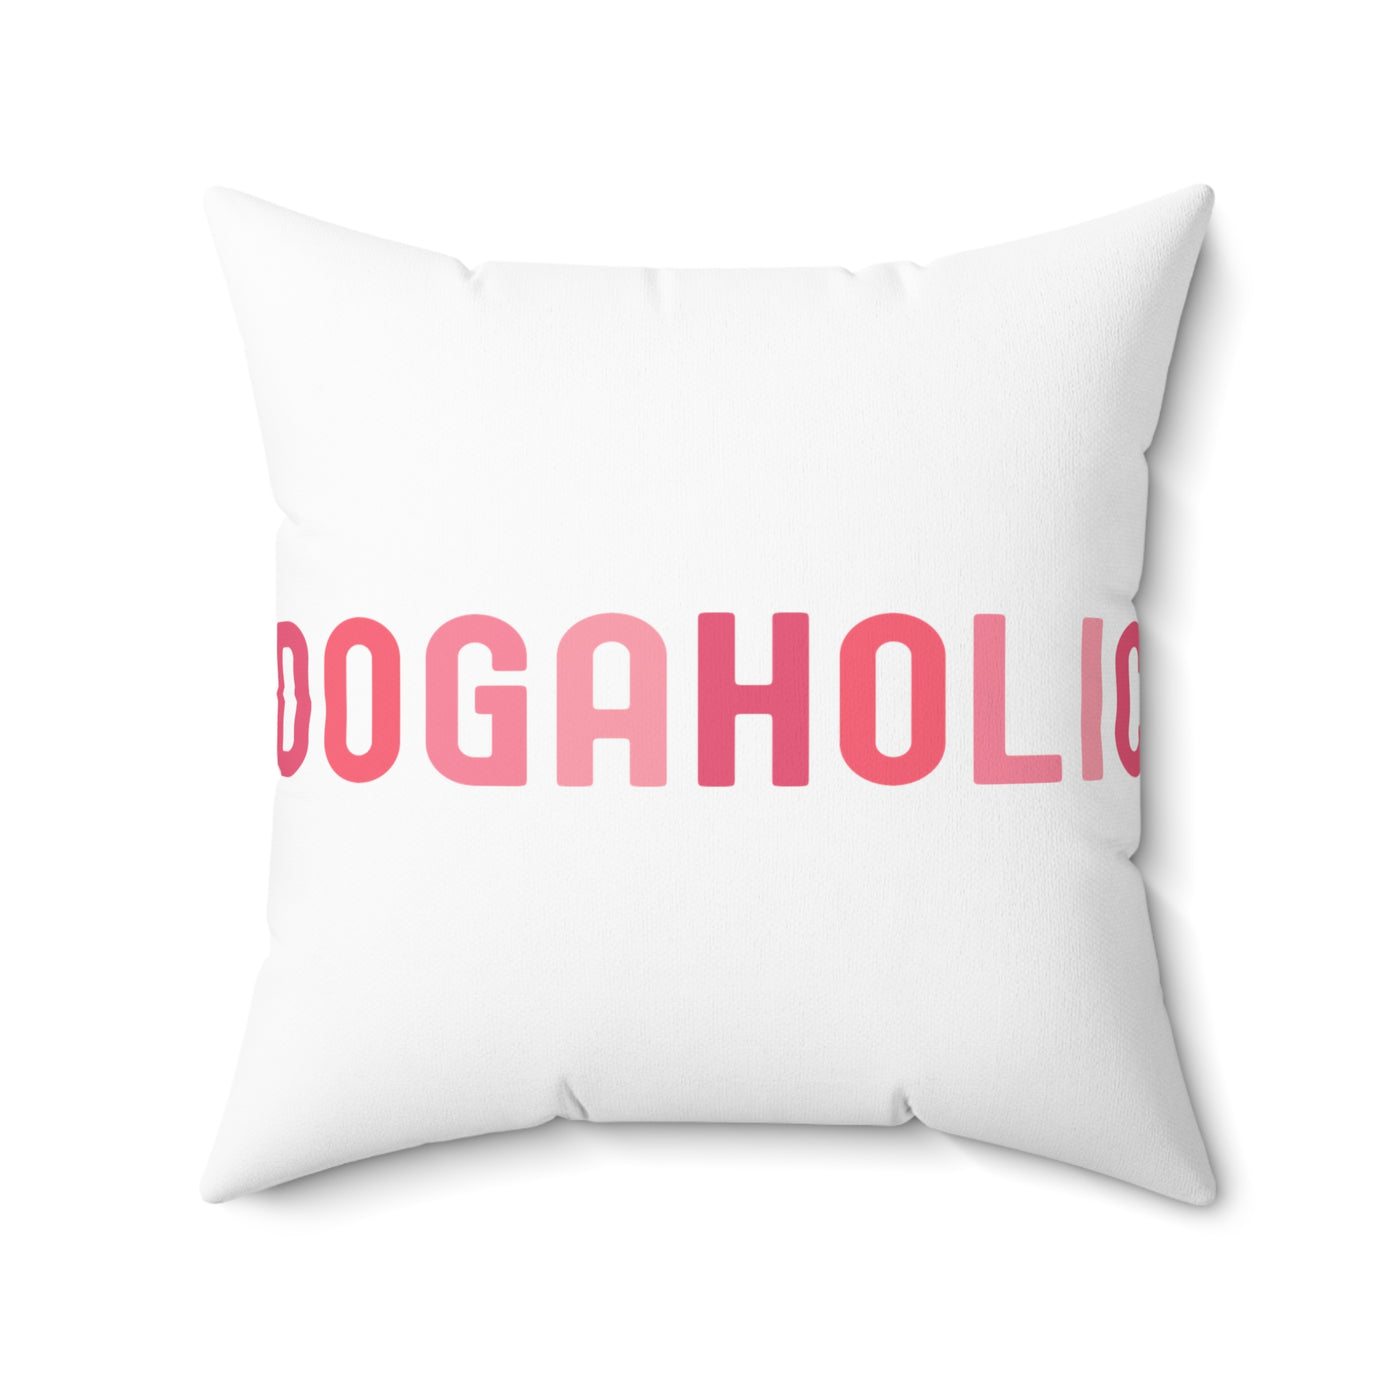 Dogaholic Square Pillow